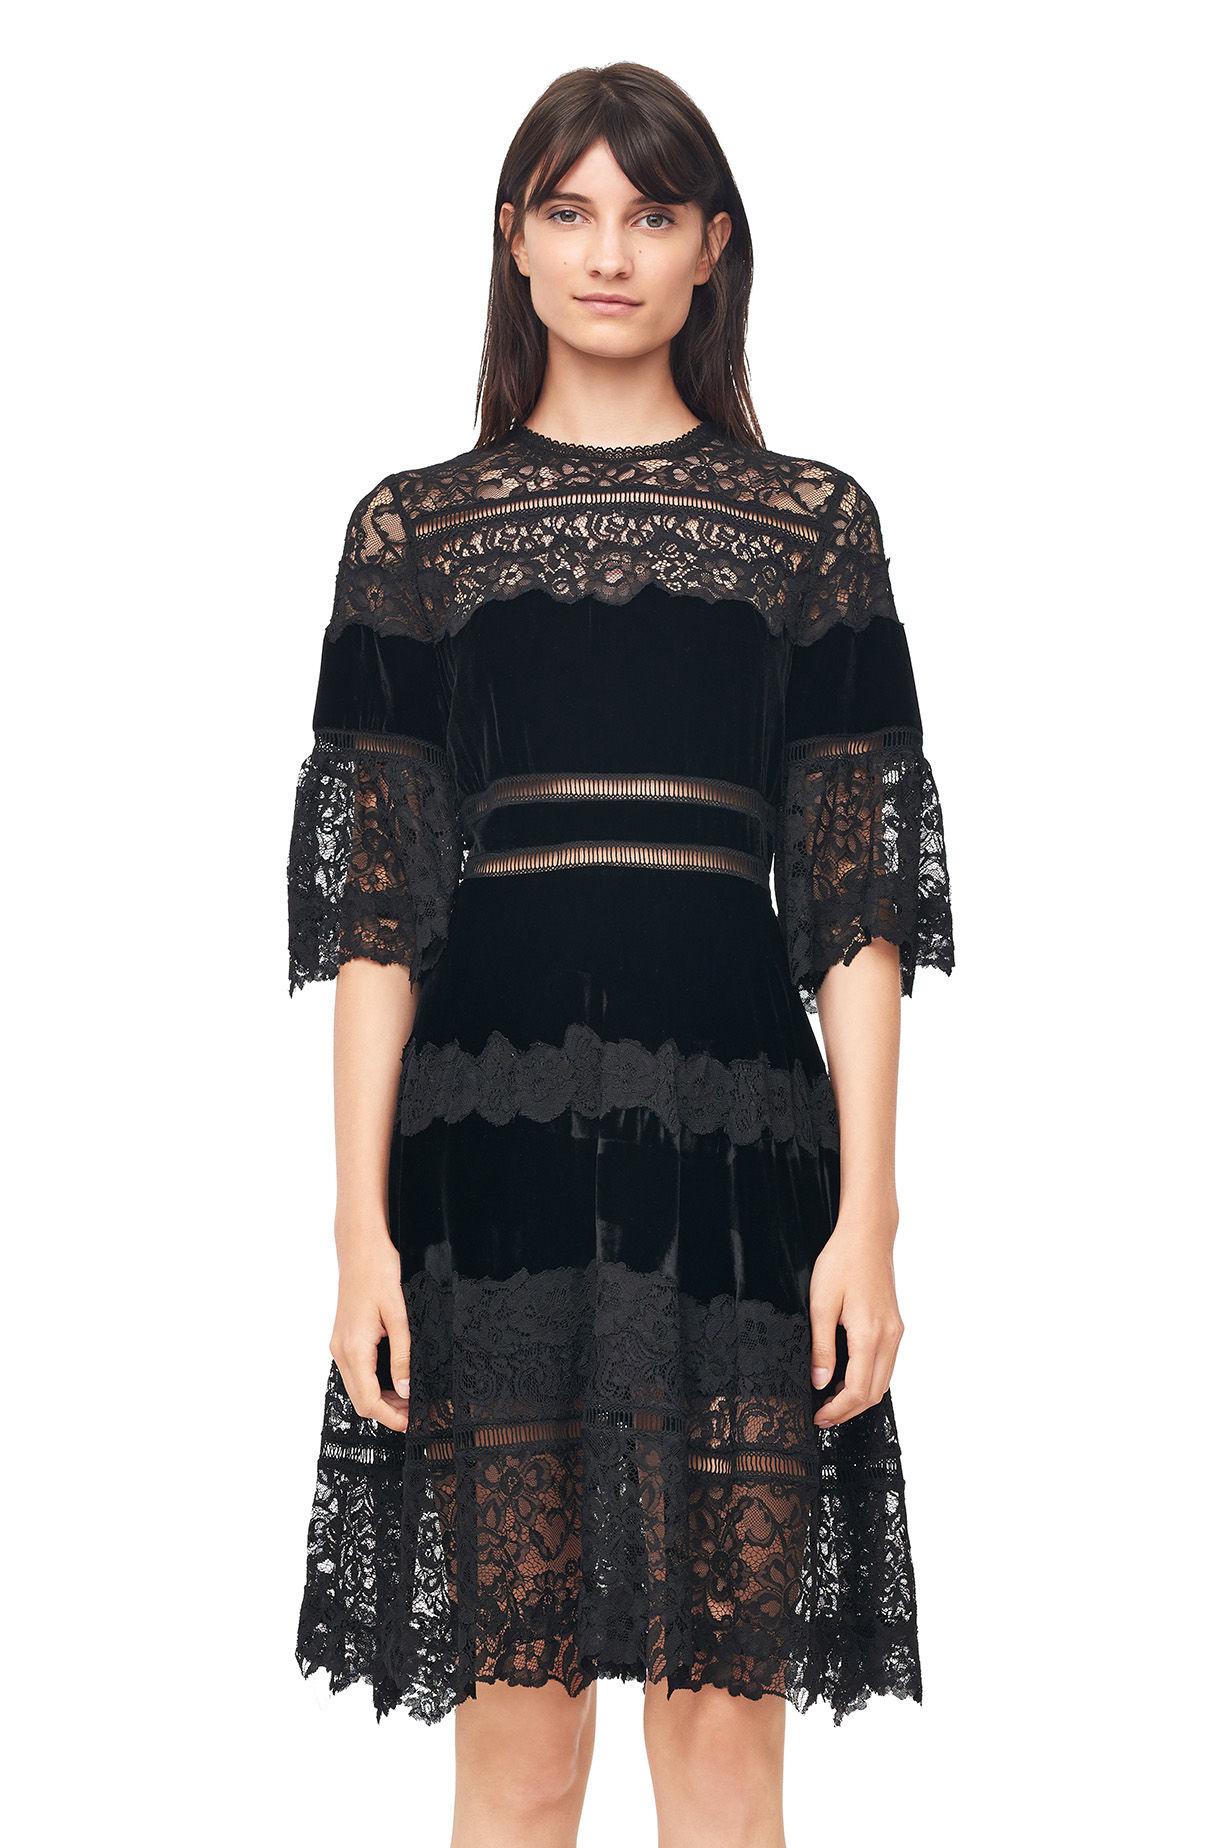 Lyst - Rebecca Taylor Velvet & Lace Dress in Black